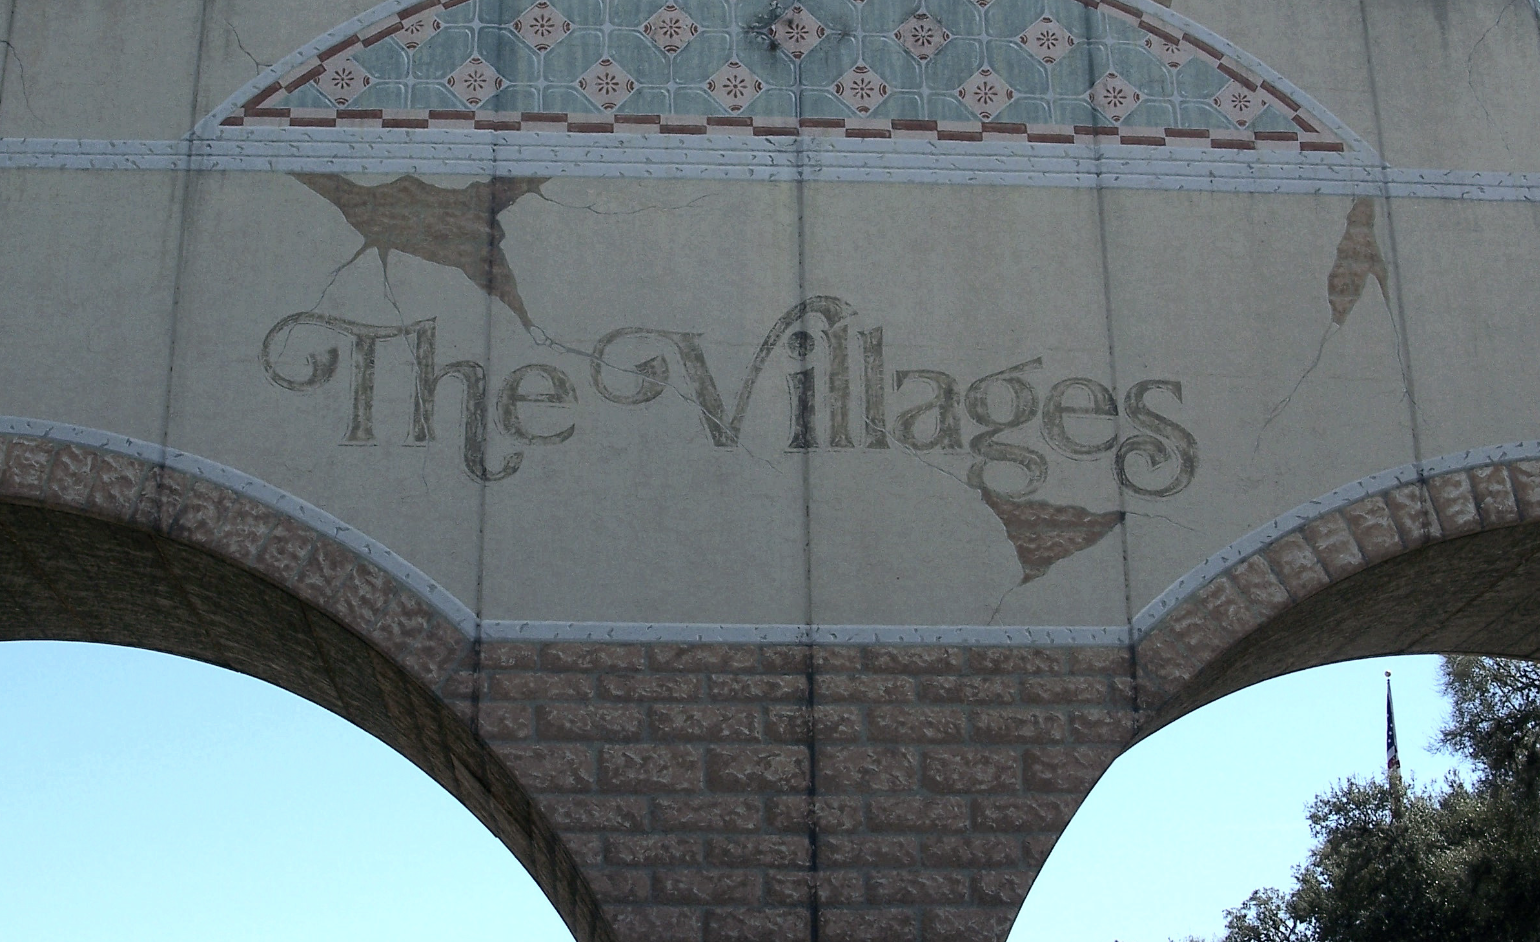 The Villages: Golf cart bridge over US 27/441